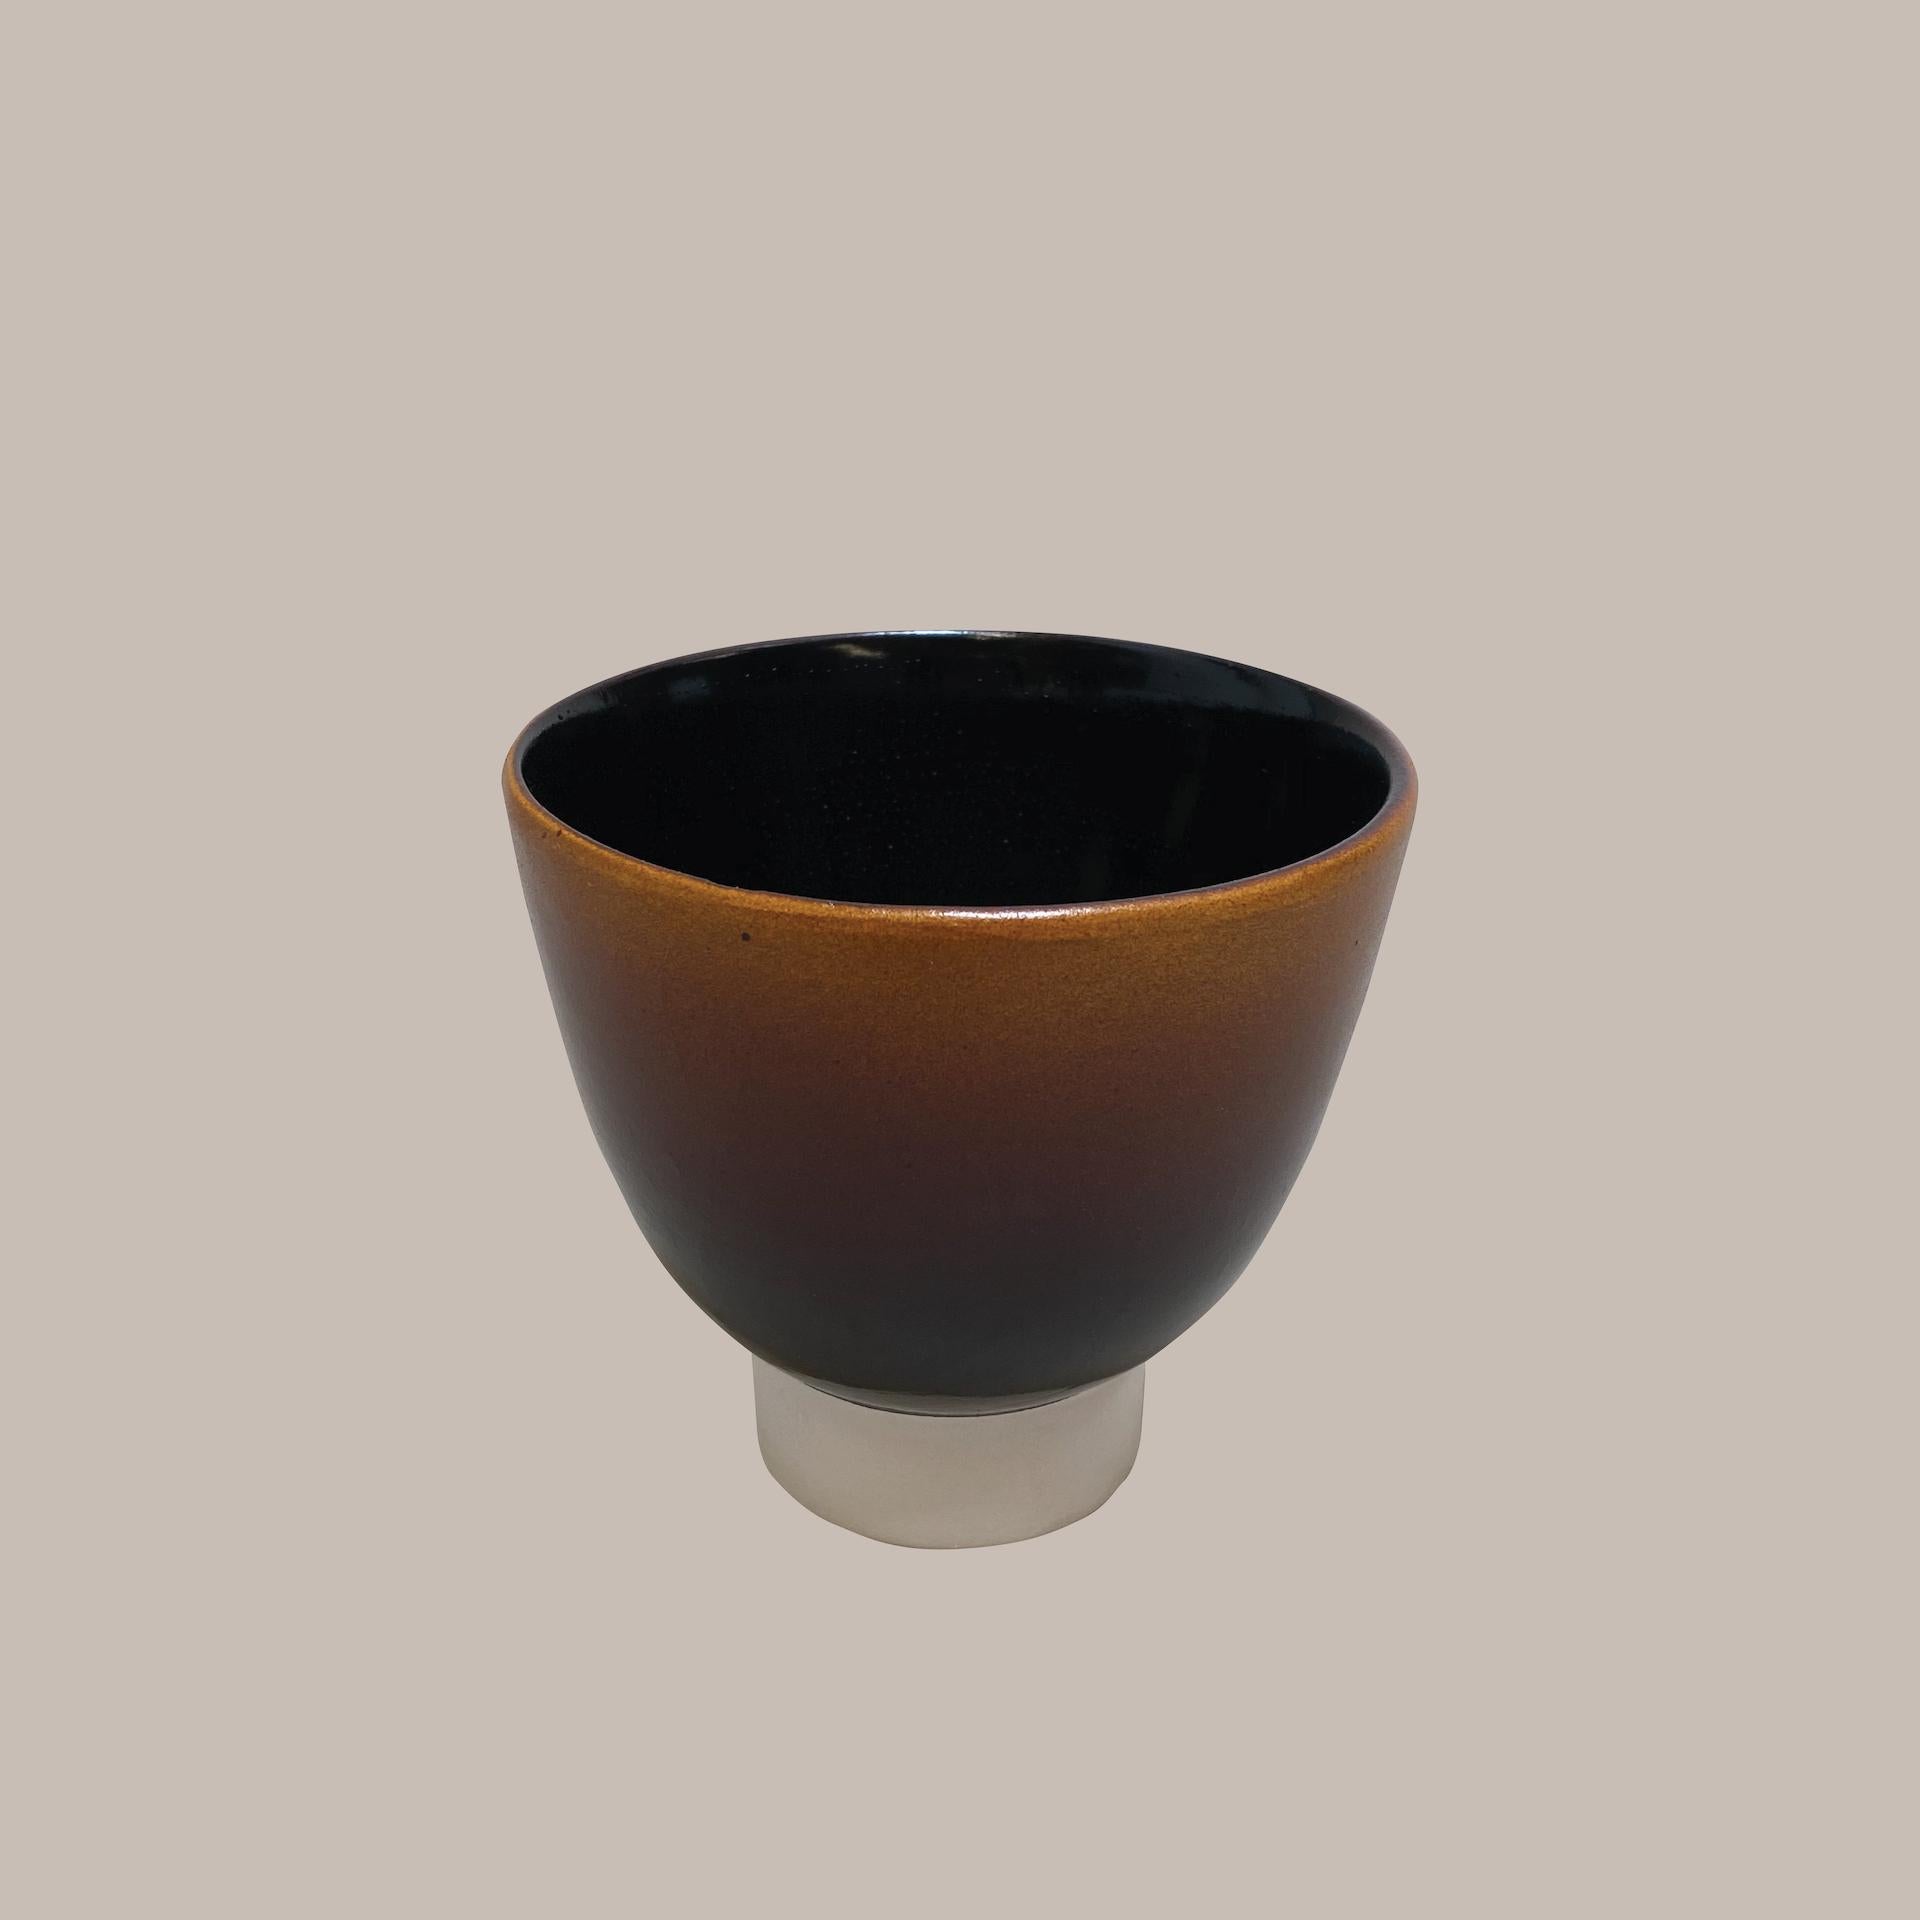 Porcelain Ott Another Paradigmatic Handmade Ceramic Vase by Studio Yoon Seok-Hyeon For Sale